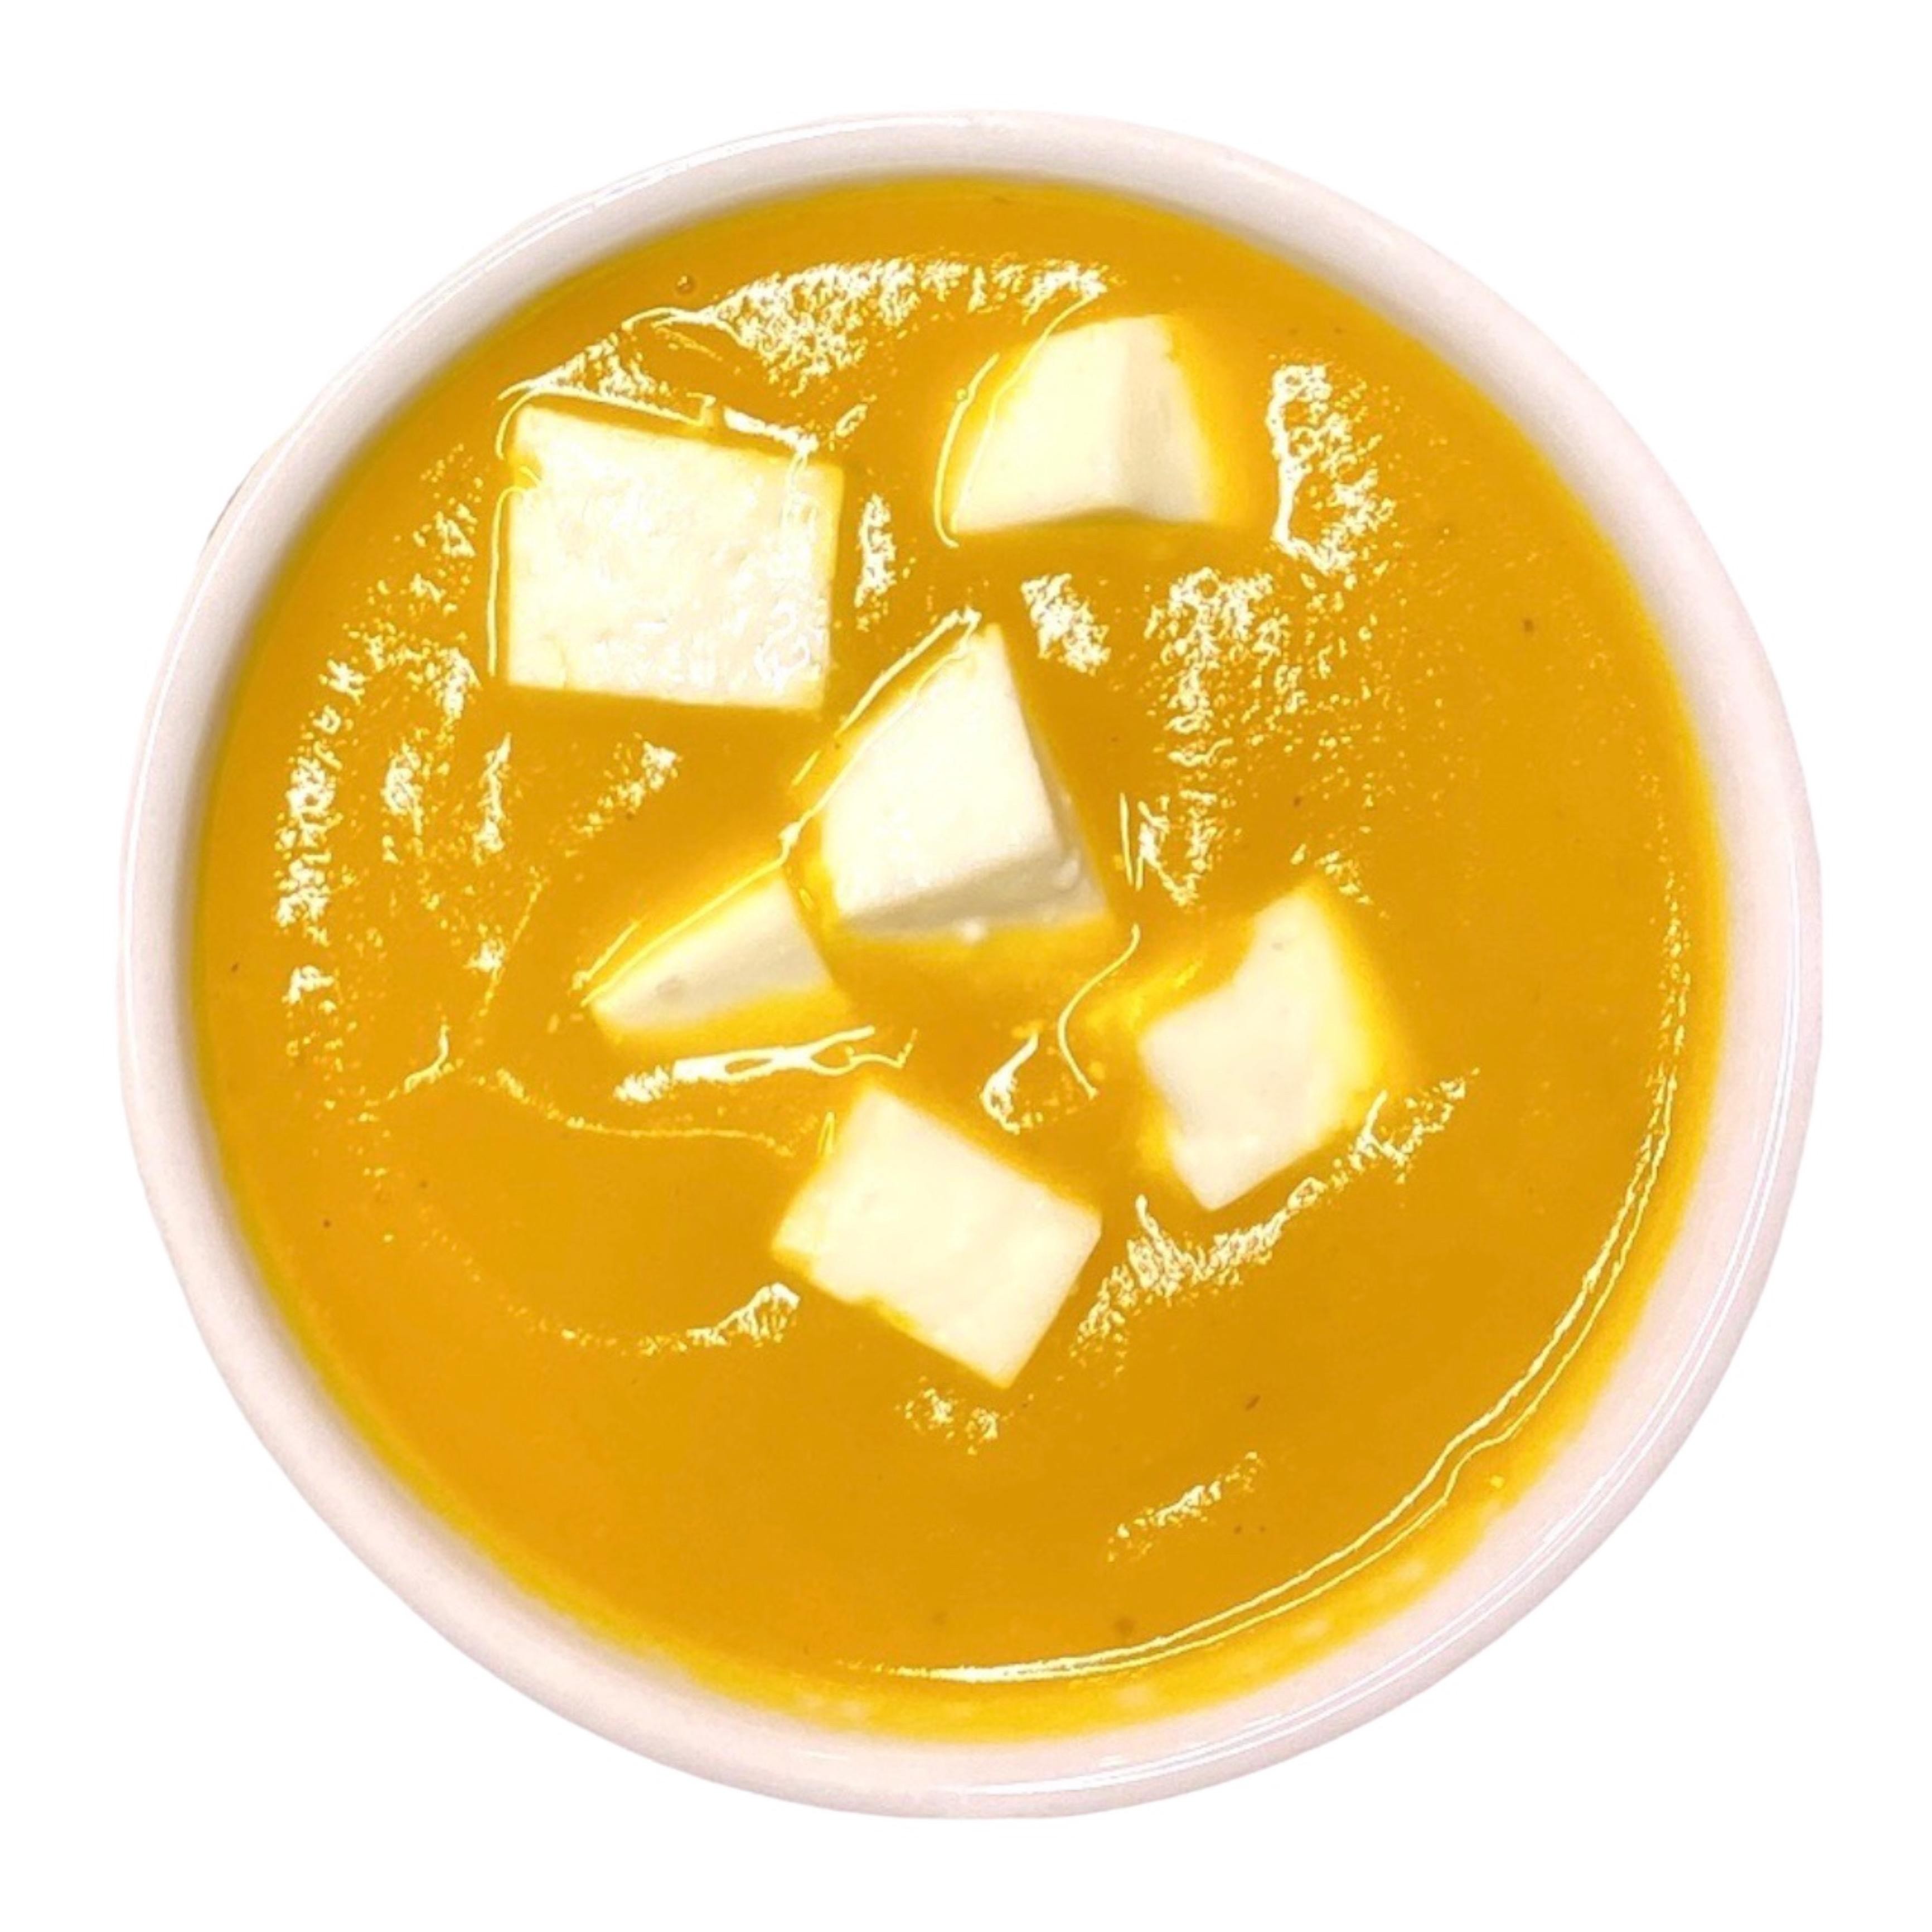 Crema de Calabasa (Soup)